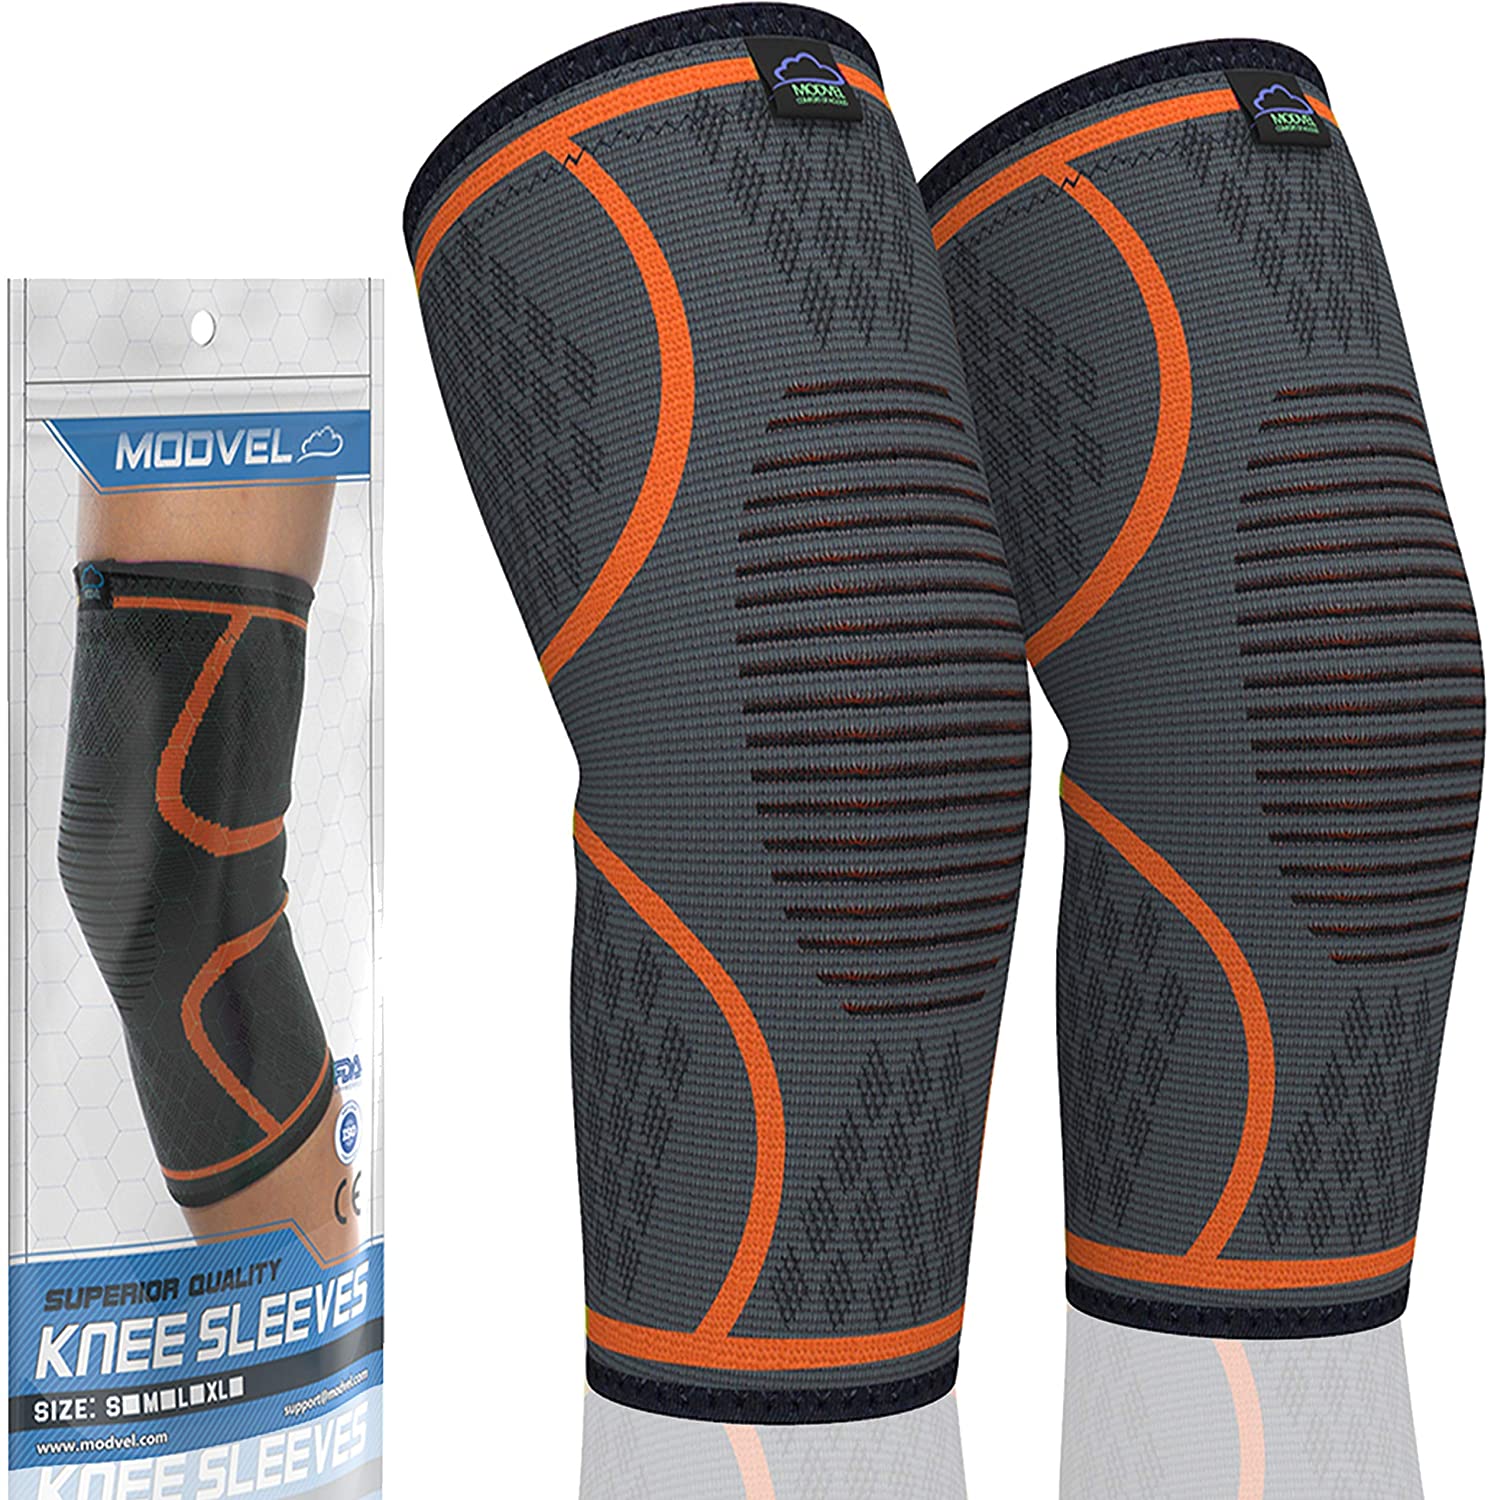 2-Pack Modvel Compression Knee Sleeve: Orange $9.50, Black $12 & more at Amazon